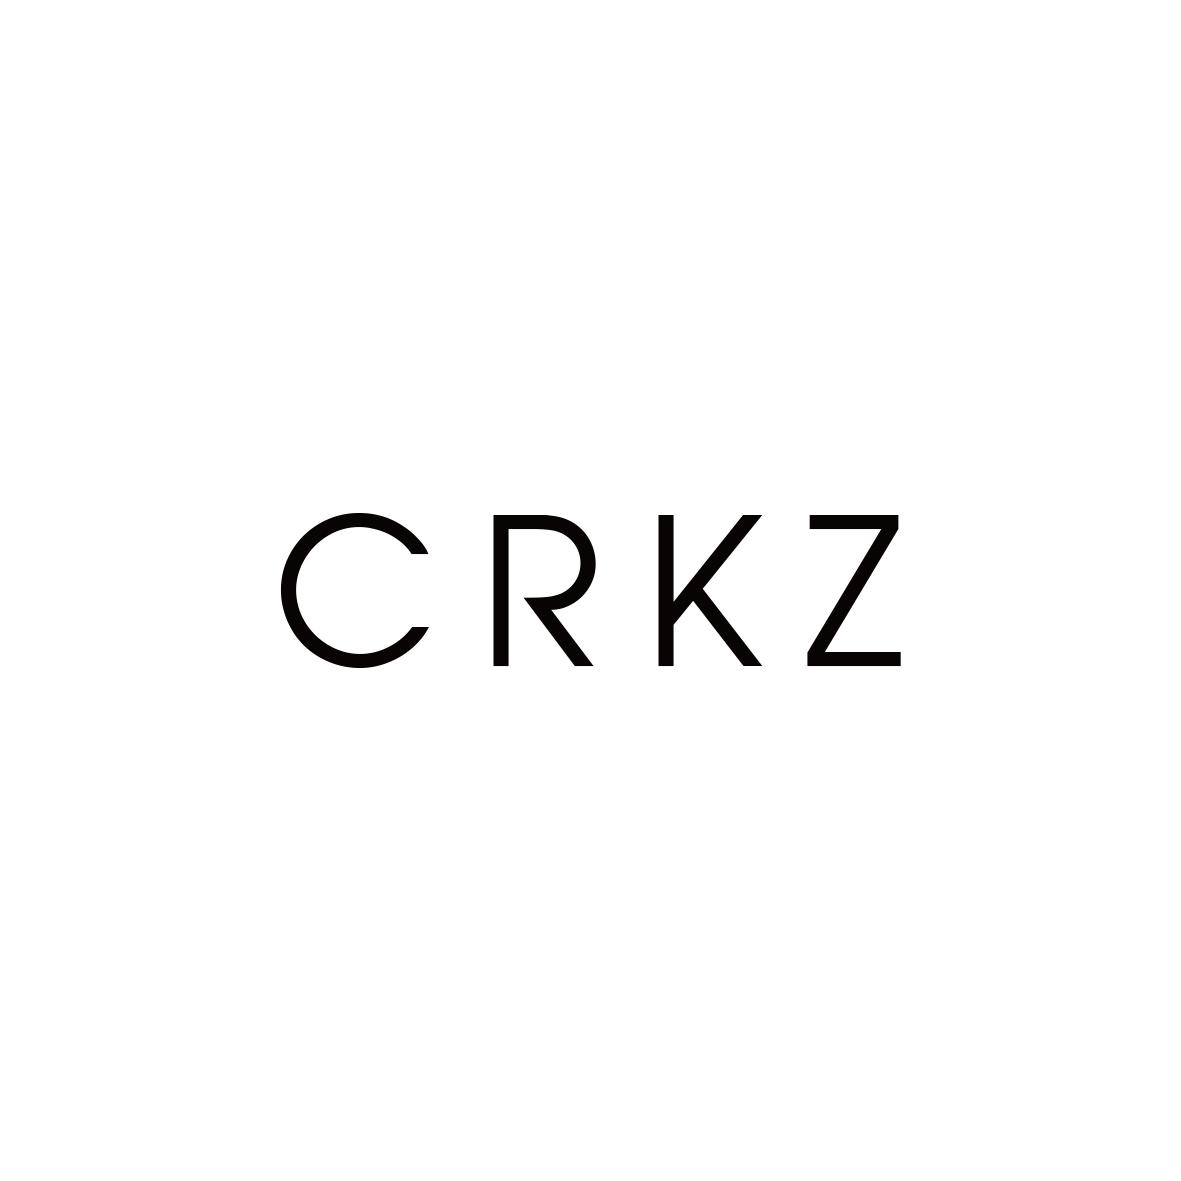 CRKZ商标转让